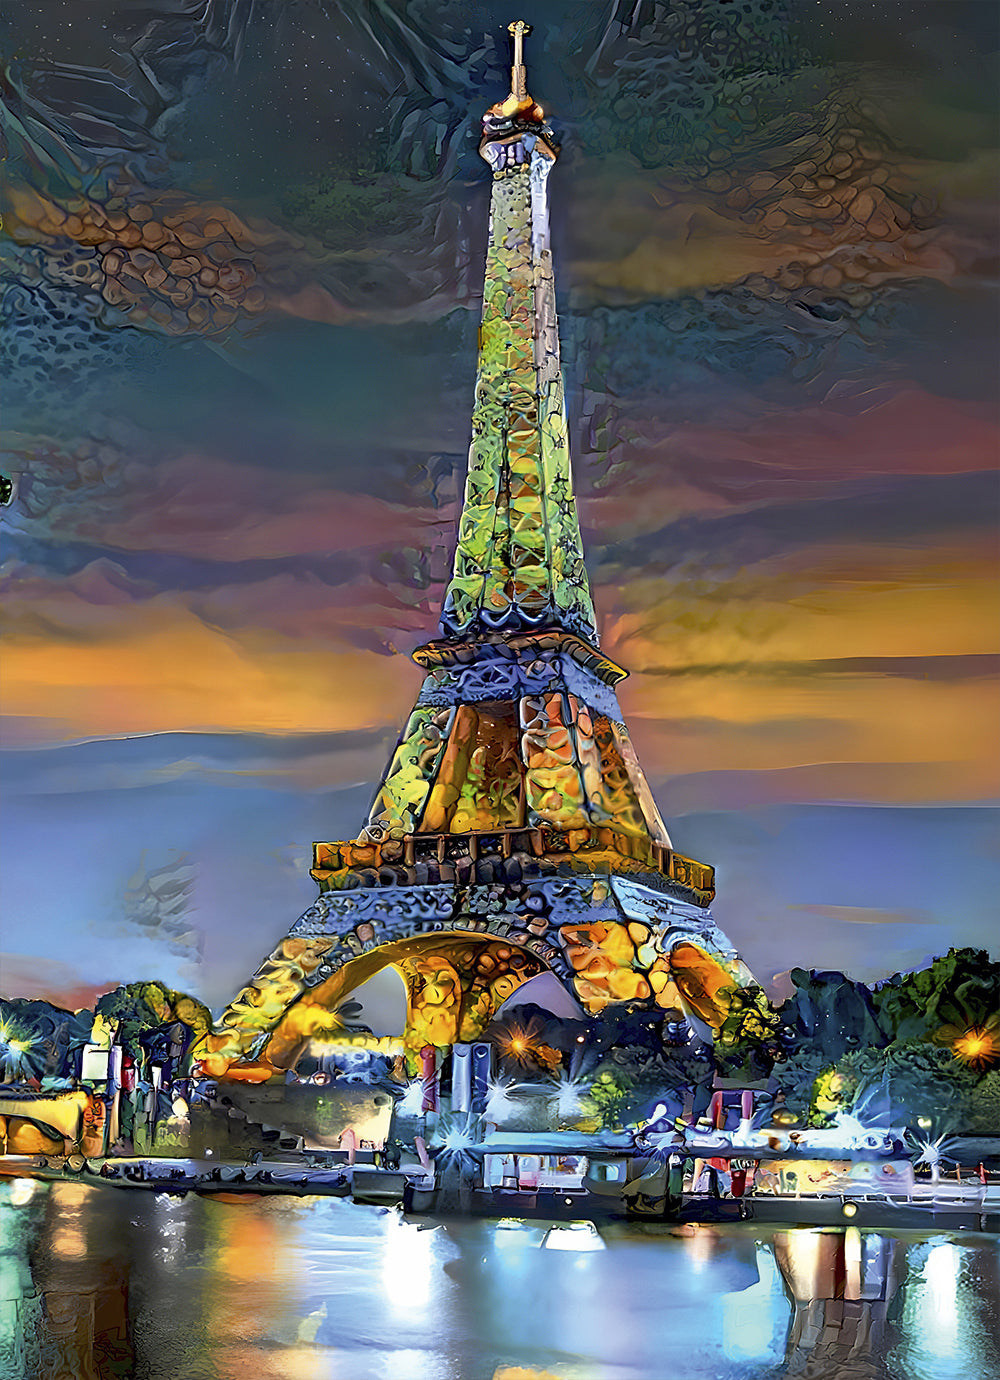 Bluebird Puzzle - Eiffel Tower at Sunset, Paris, France - 1000 Piece Jigsaw Puzzle